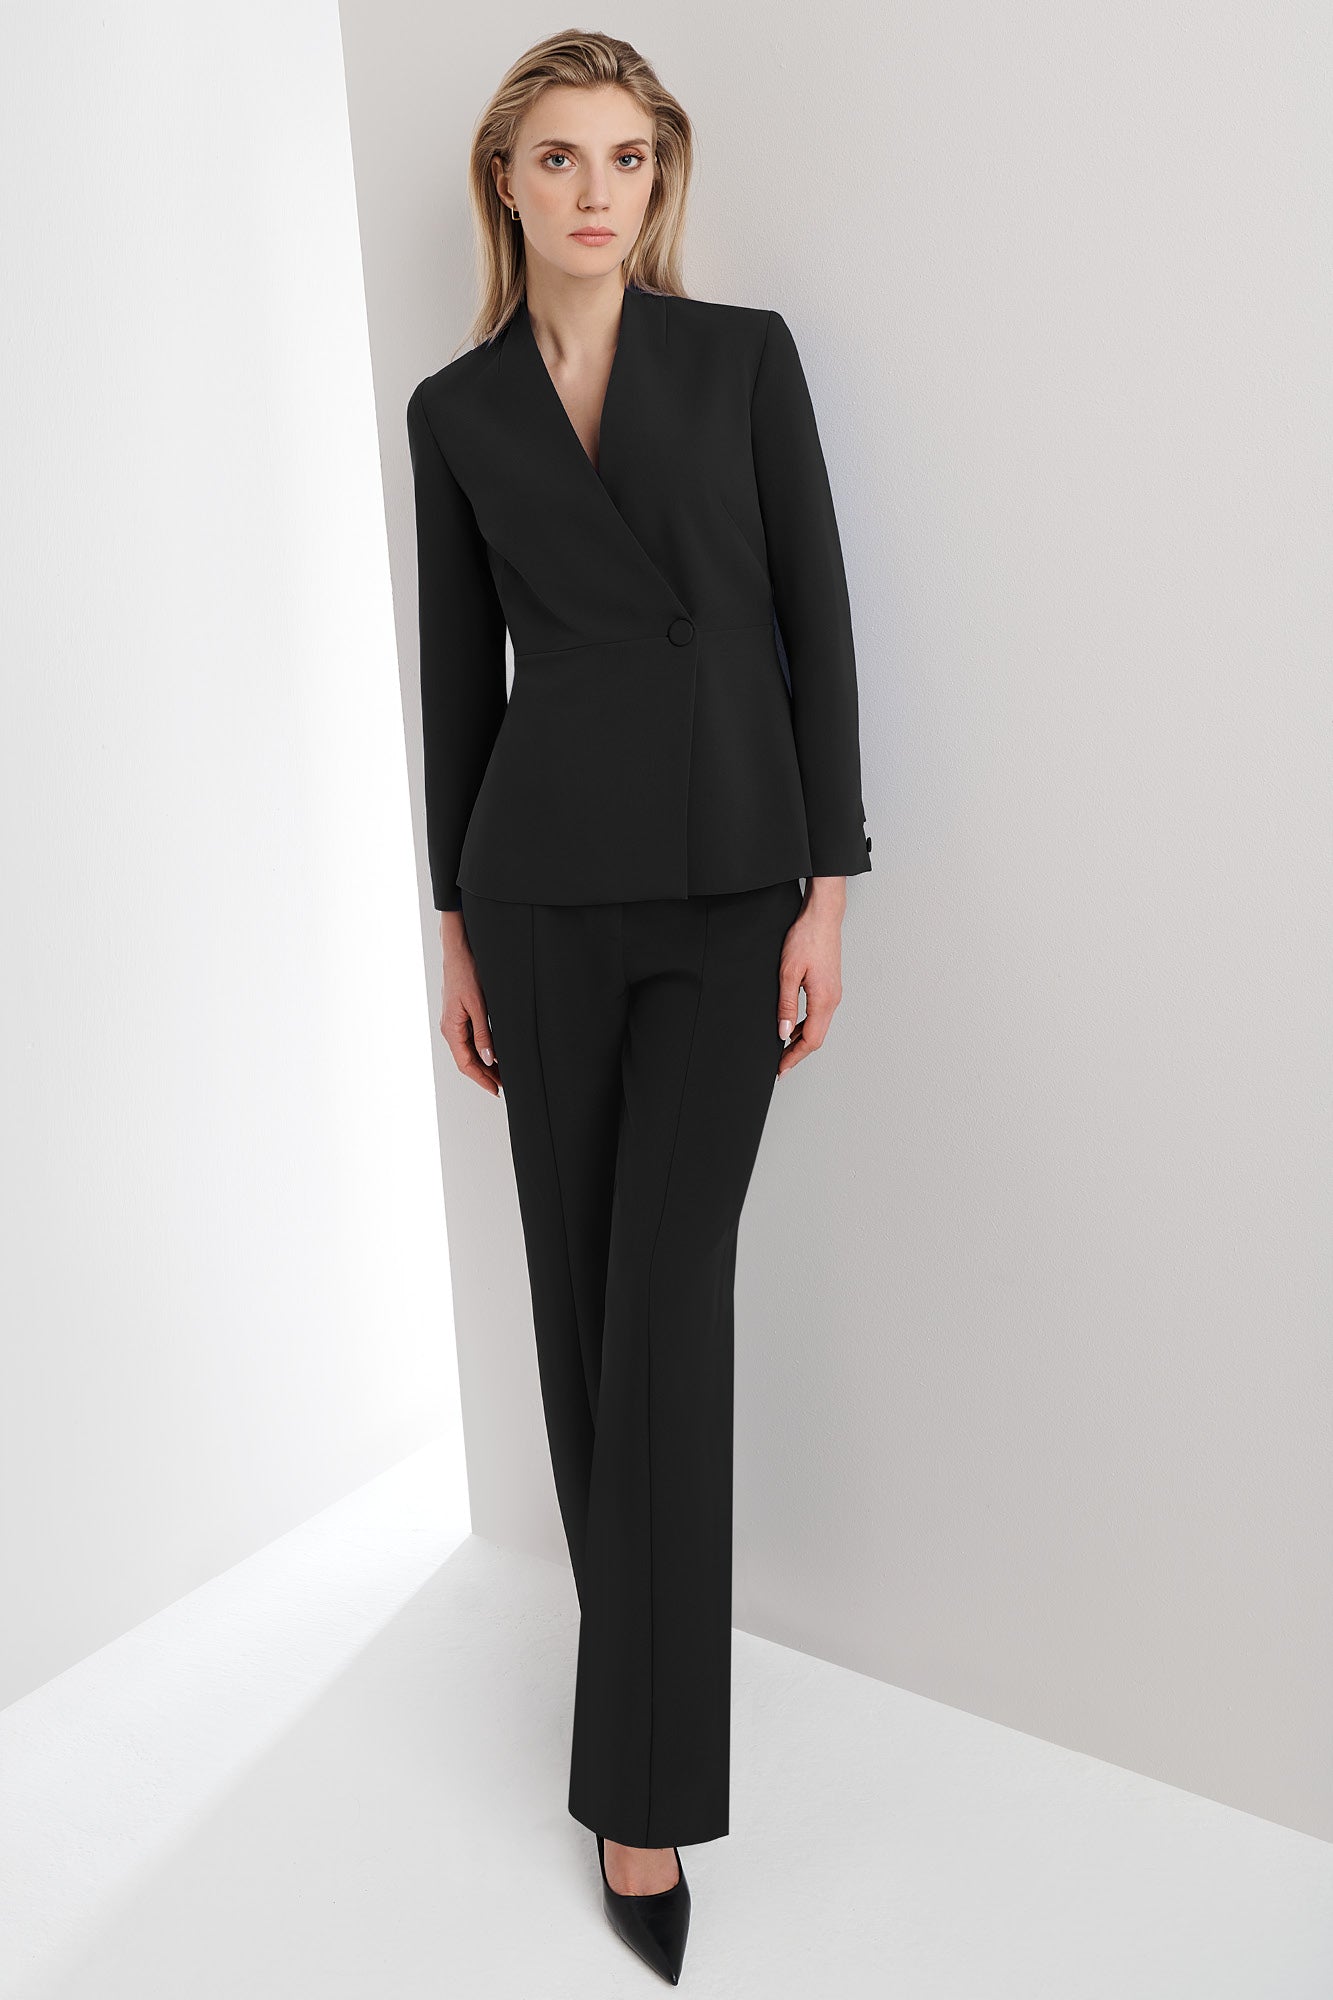 Brompton Black Suiting Jacket | Libby London